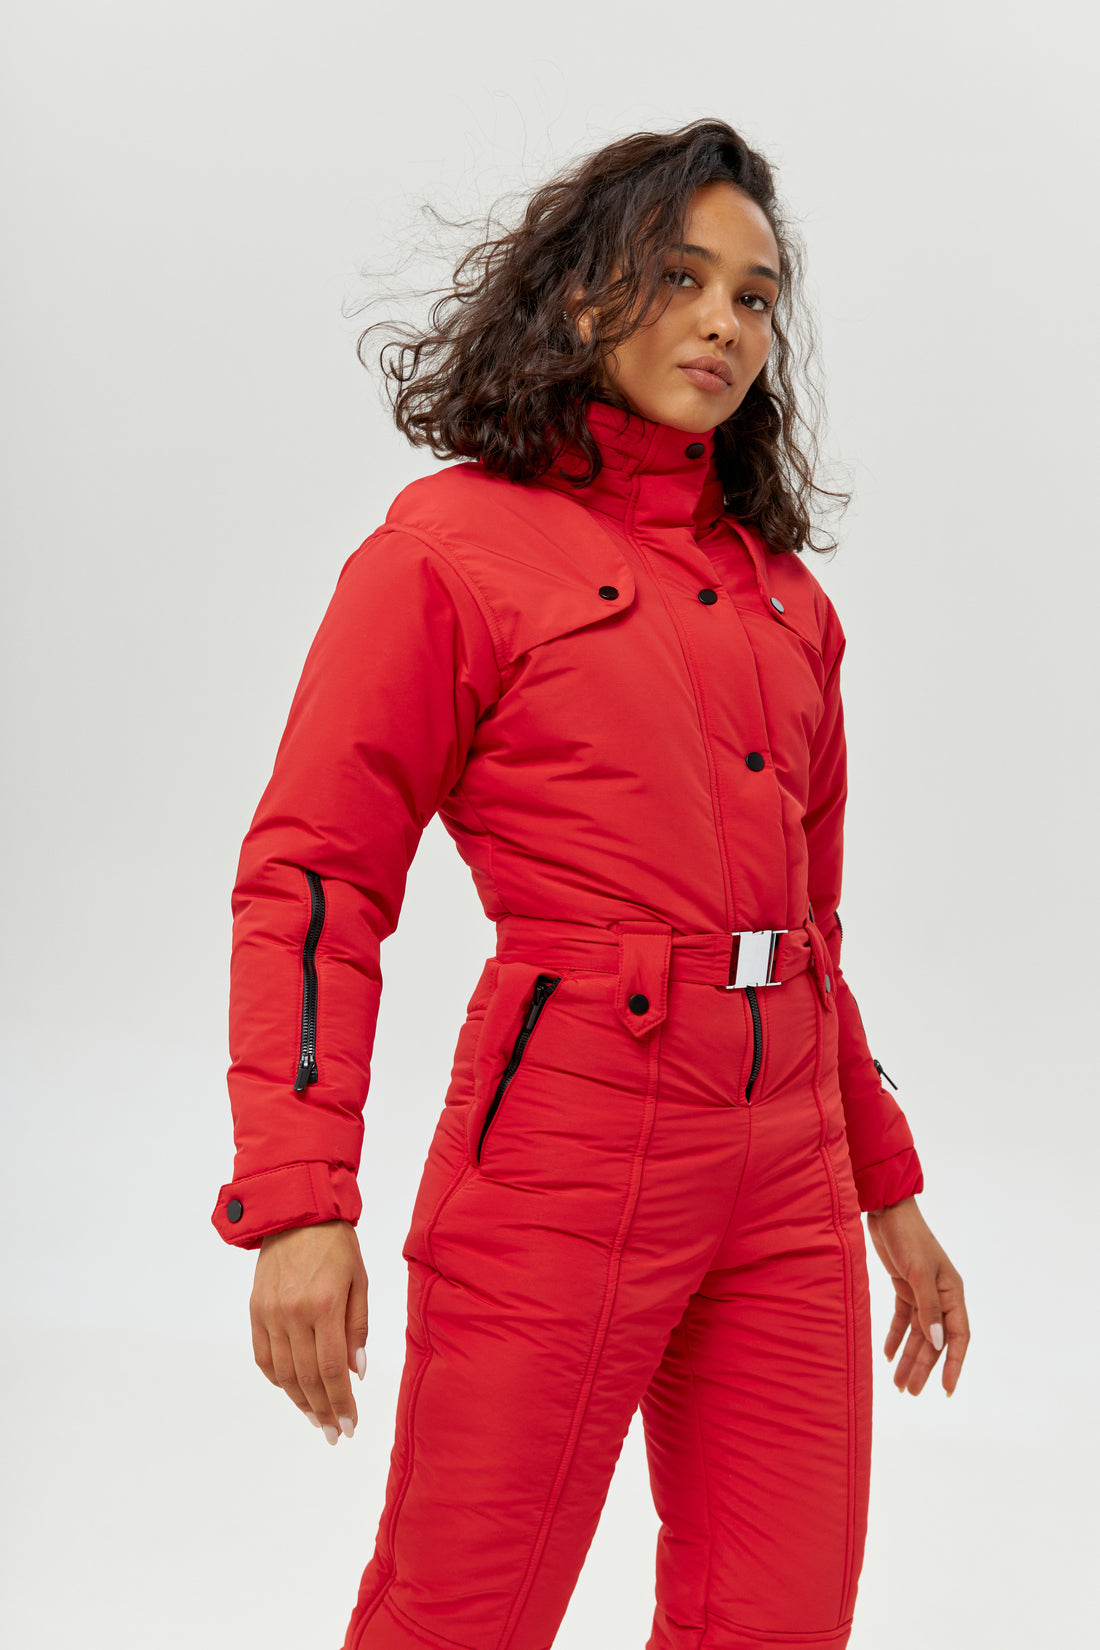 Red waterproof snowsuit - RAINIER - RED membrana - Winter onesie ski suit for women